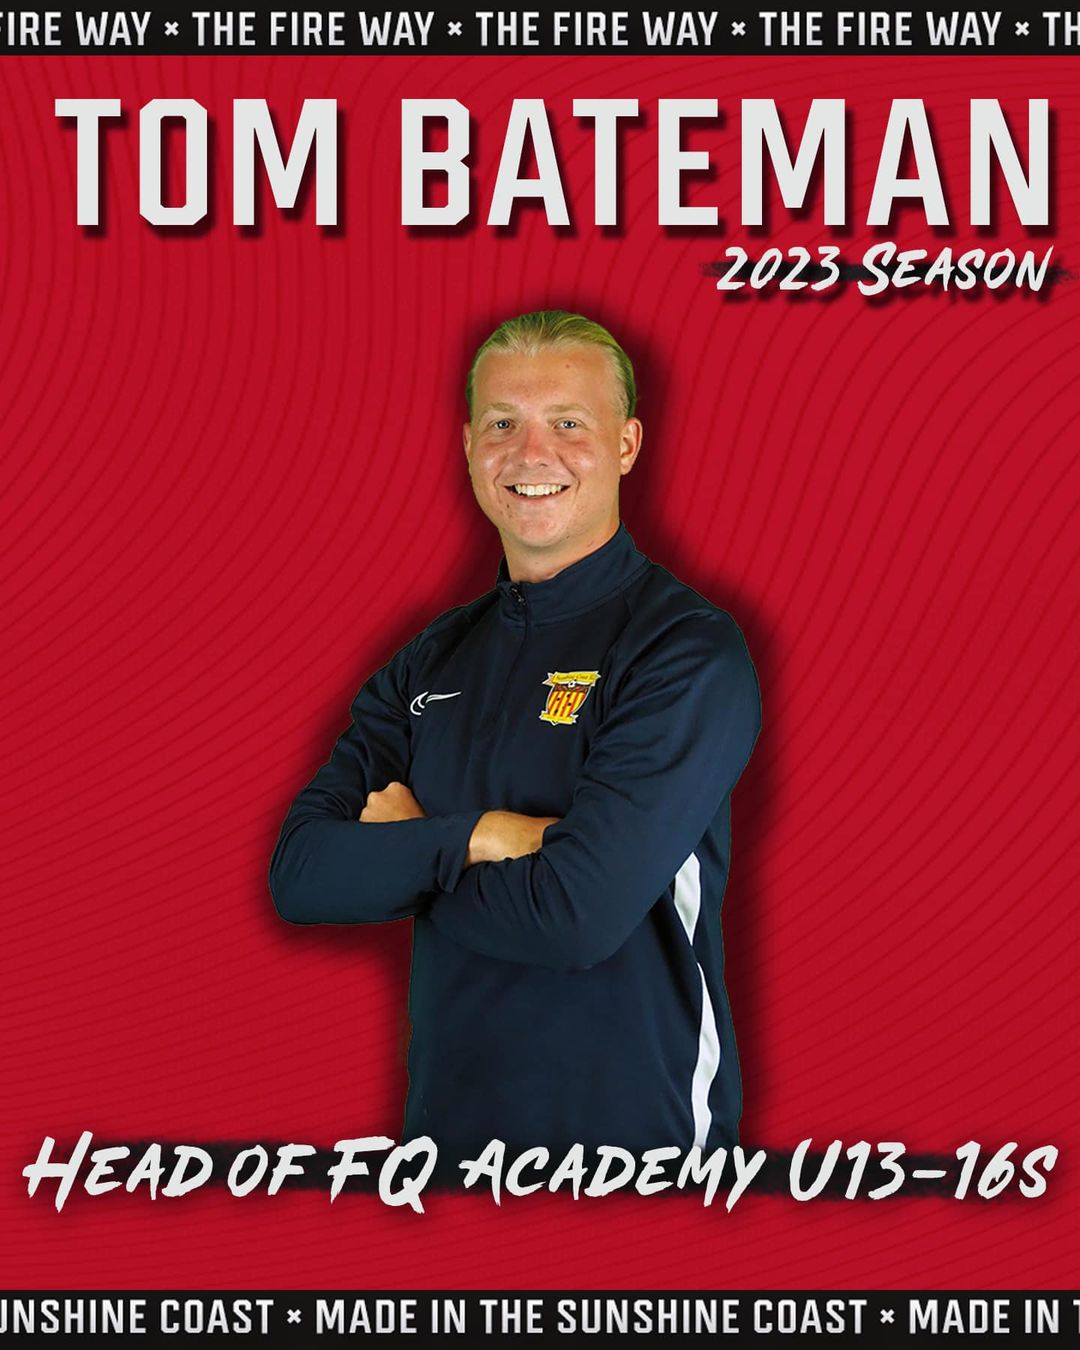 Tom Bateman Appointed Head of FQ Academy U13-16’s